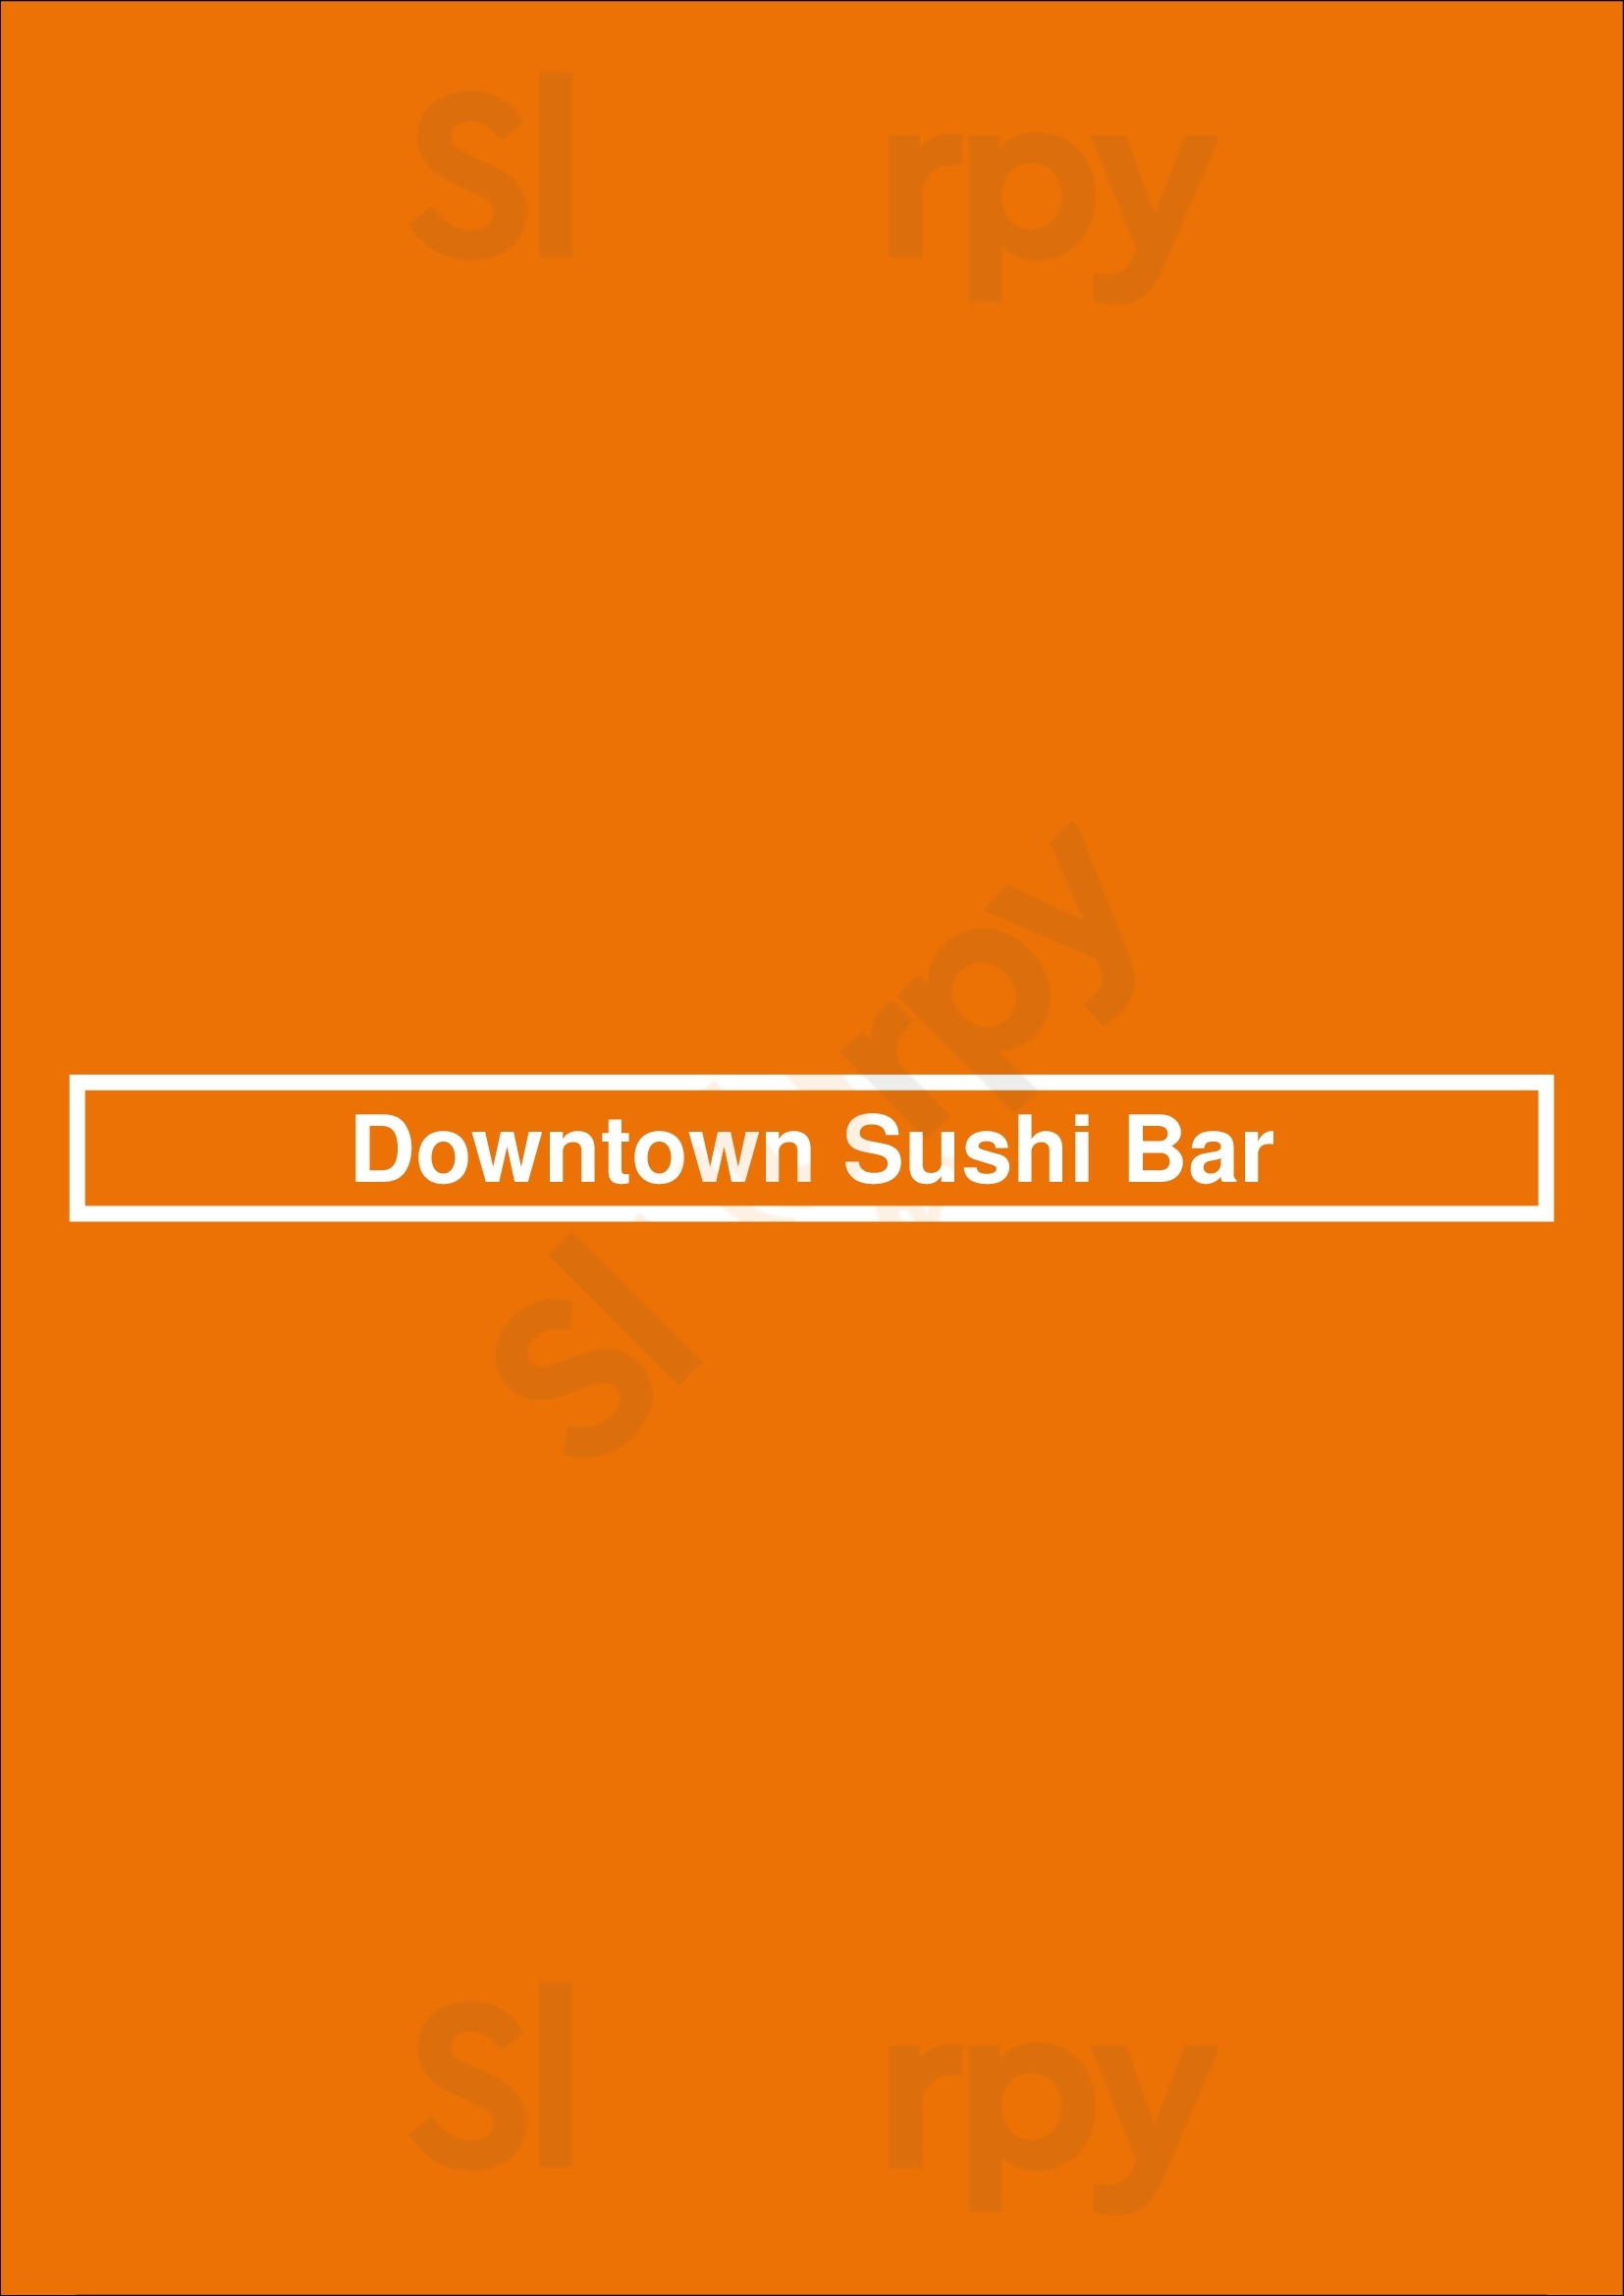 Downtown Sushi Bar Vancouver Menu - 1